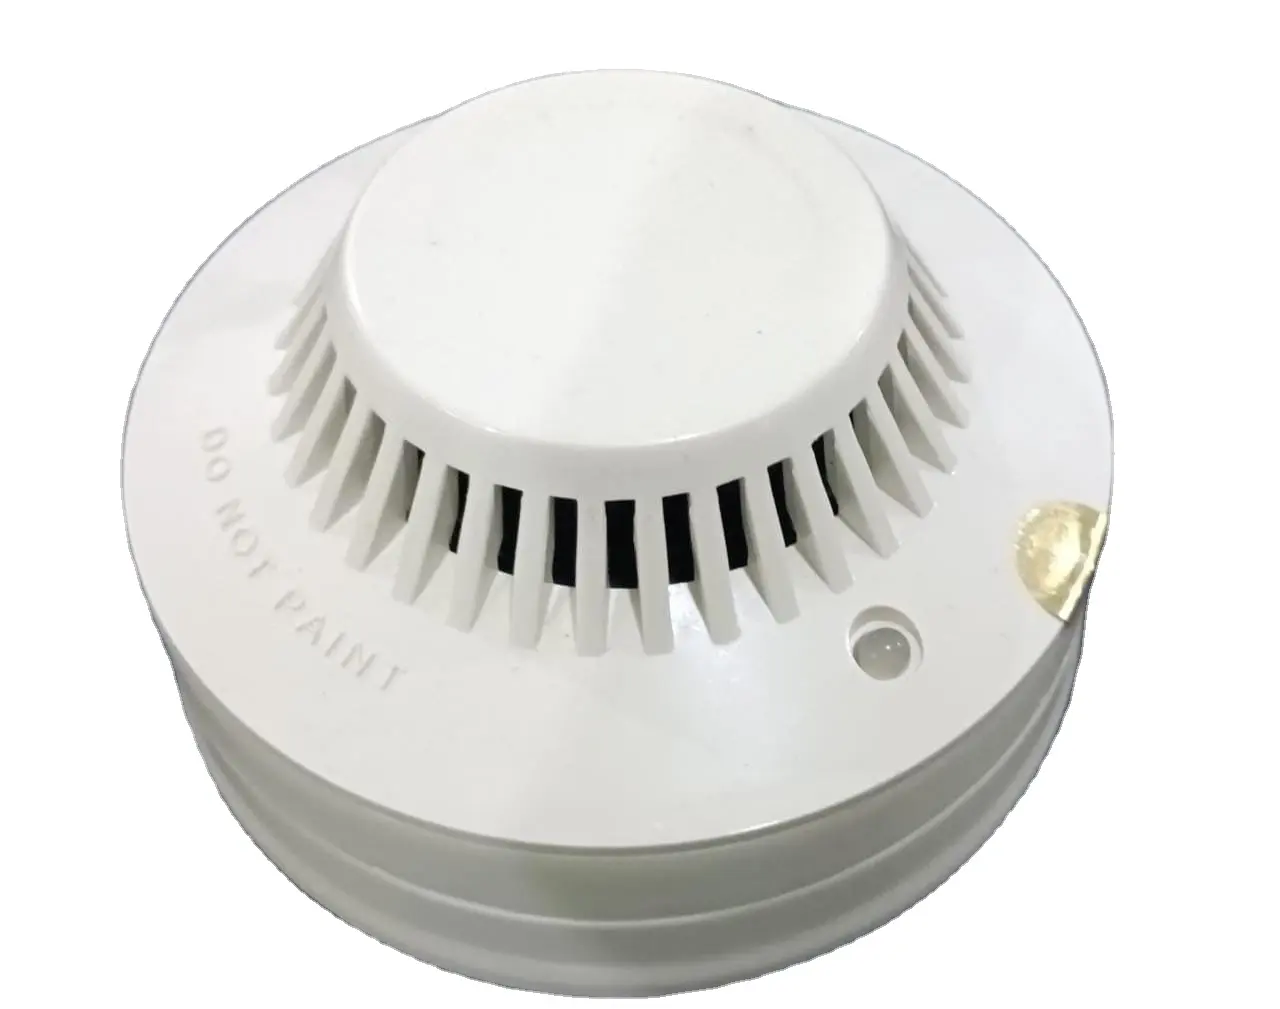 High Quality Conventional Fire Alarm Smoke Detector Smoke Alert Smoke Detector Fire Protection system